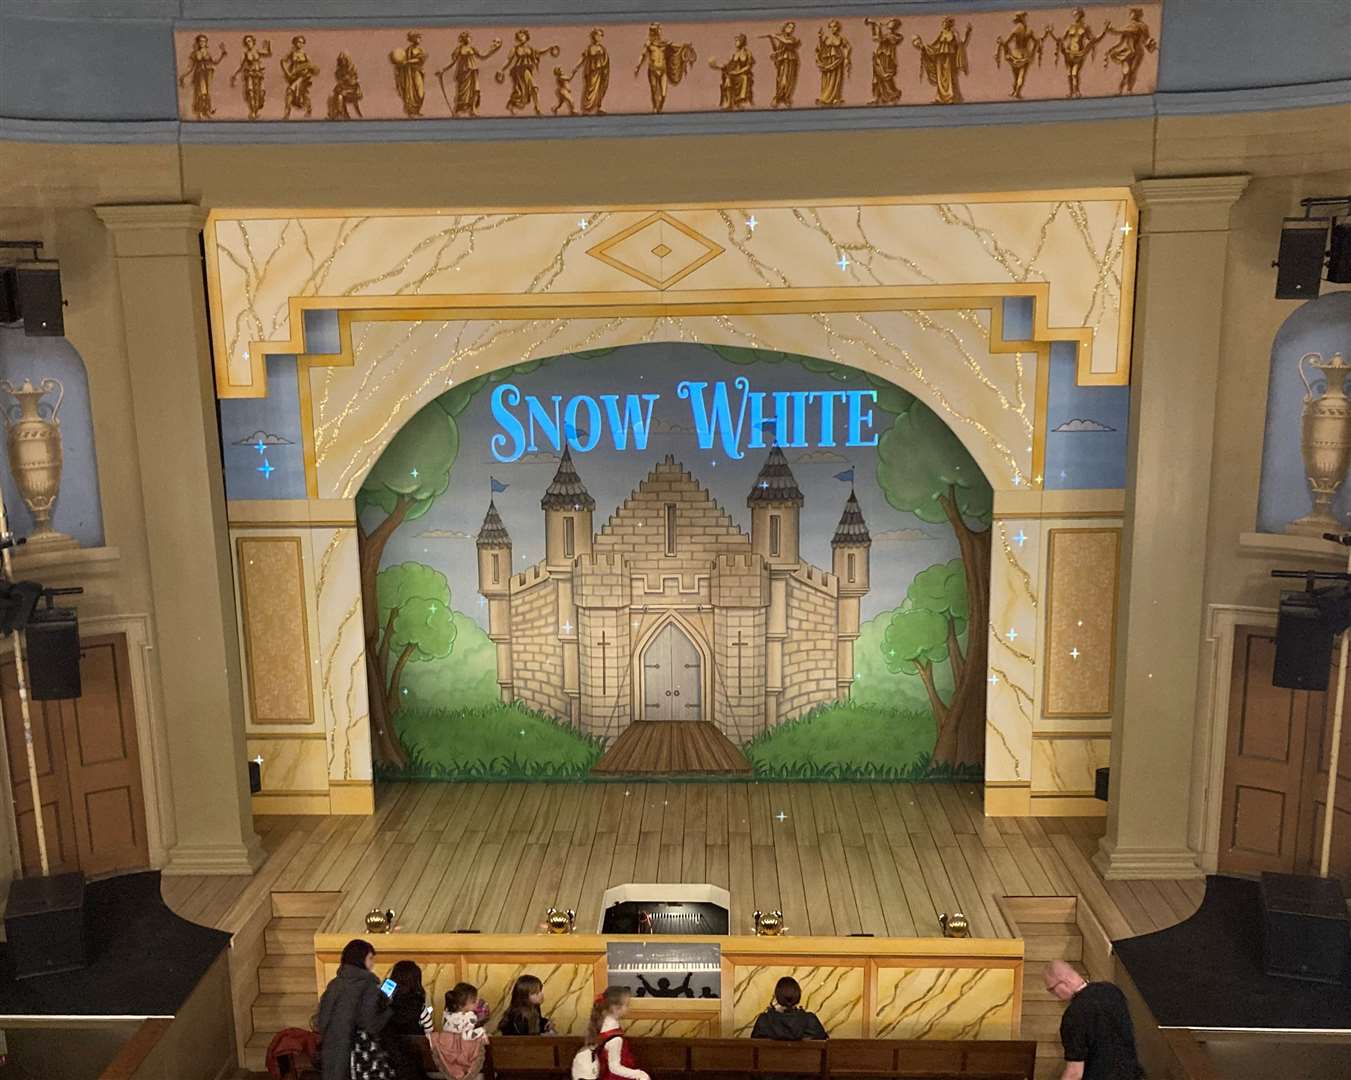 Theatre Royal Bury St Edmunds’ take on Snow White was pantomime perfection